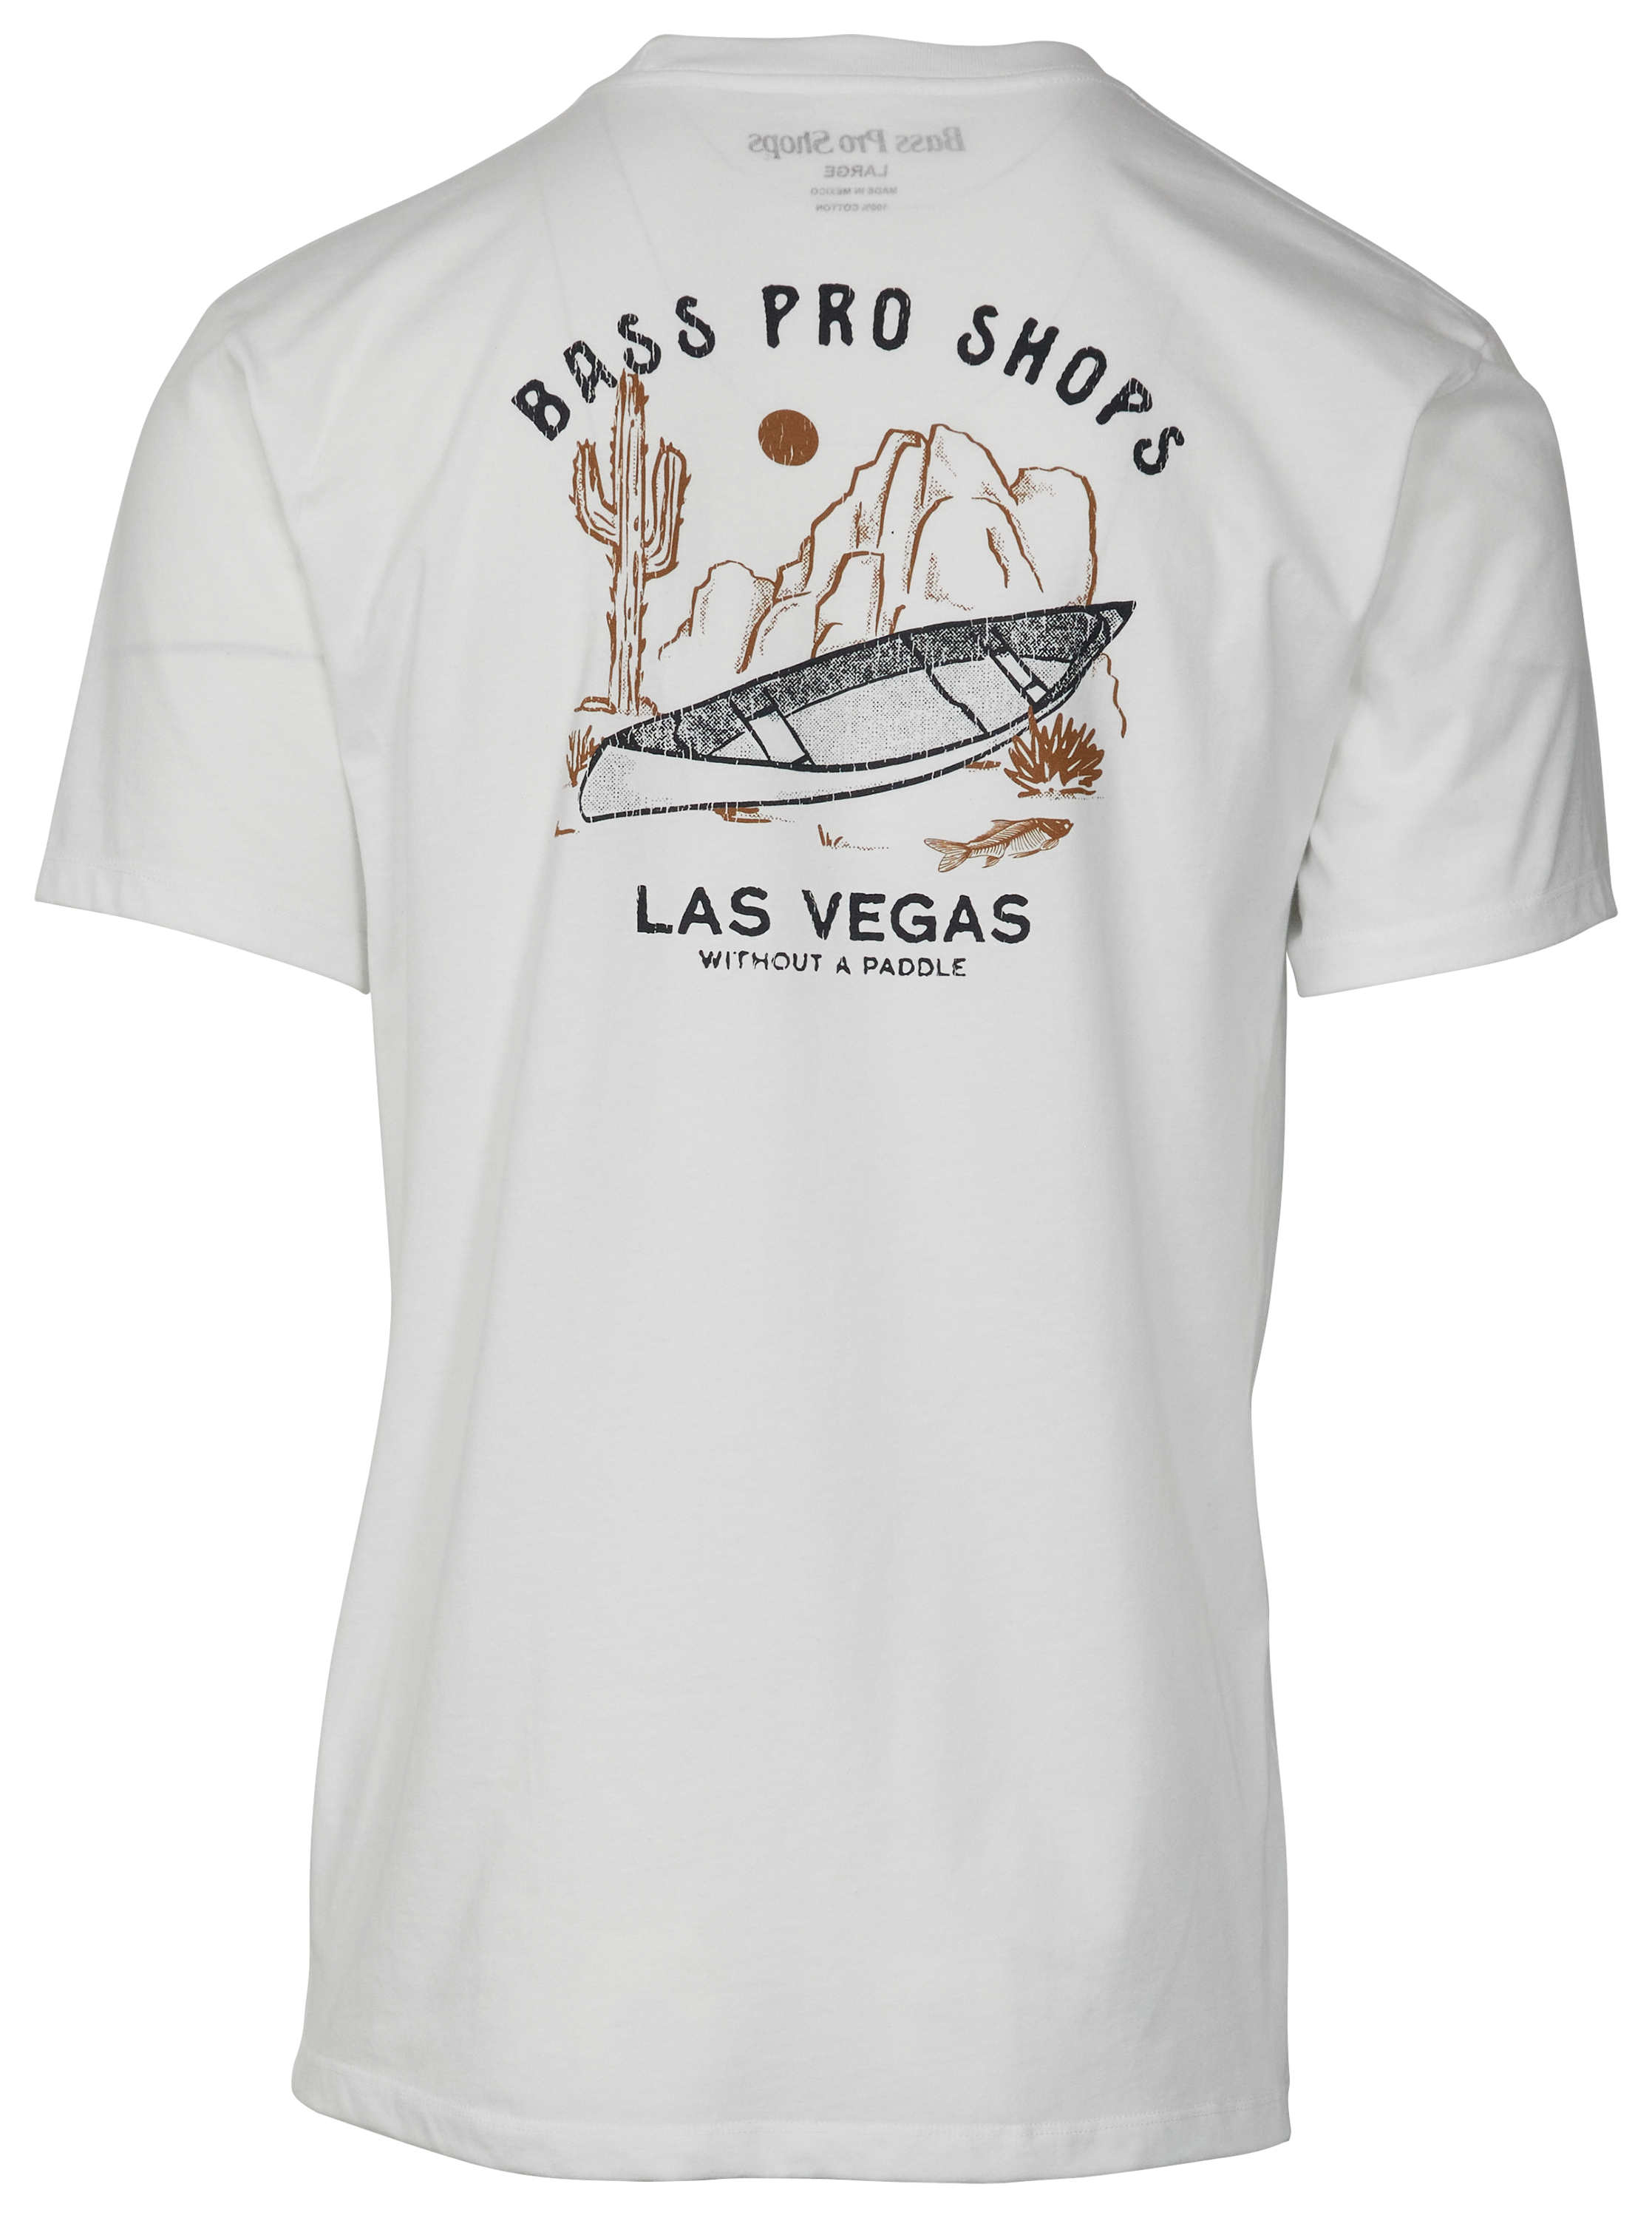 Bass Pro Shops Las Vegas Without A Paddle Short-Sleeve T-Shirt for Men - White - L